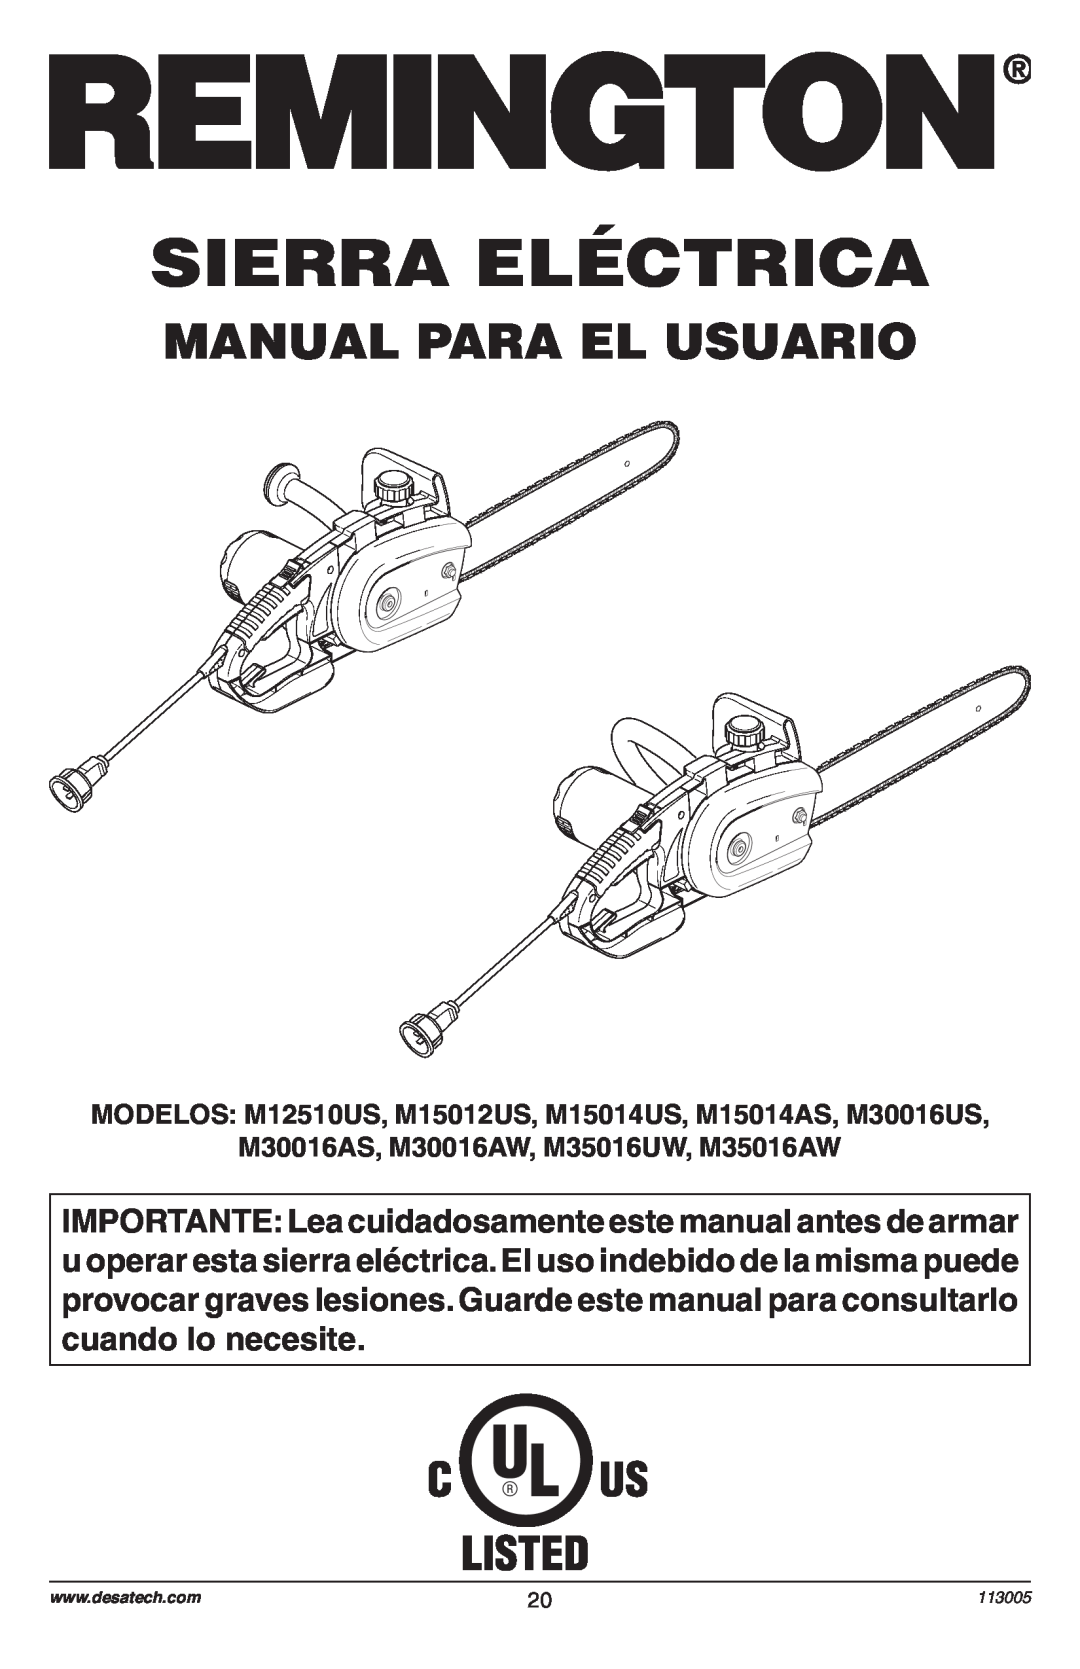 Remington Power Tools Electric Chain Saw Sierra Eléctrica, Manual Para El Usuario, M30016AS, M30016AW, M35016UW, M35016AW 